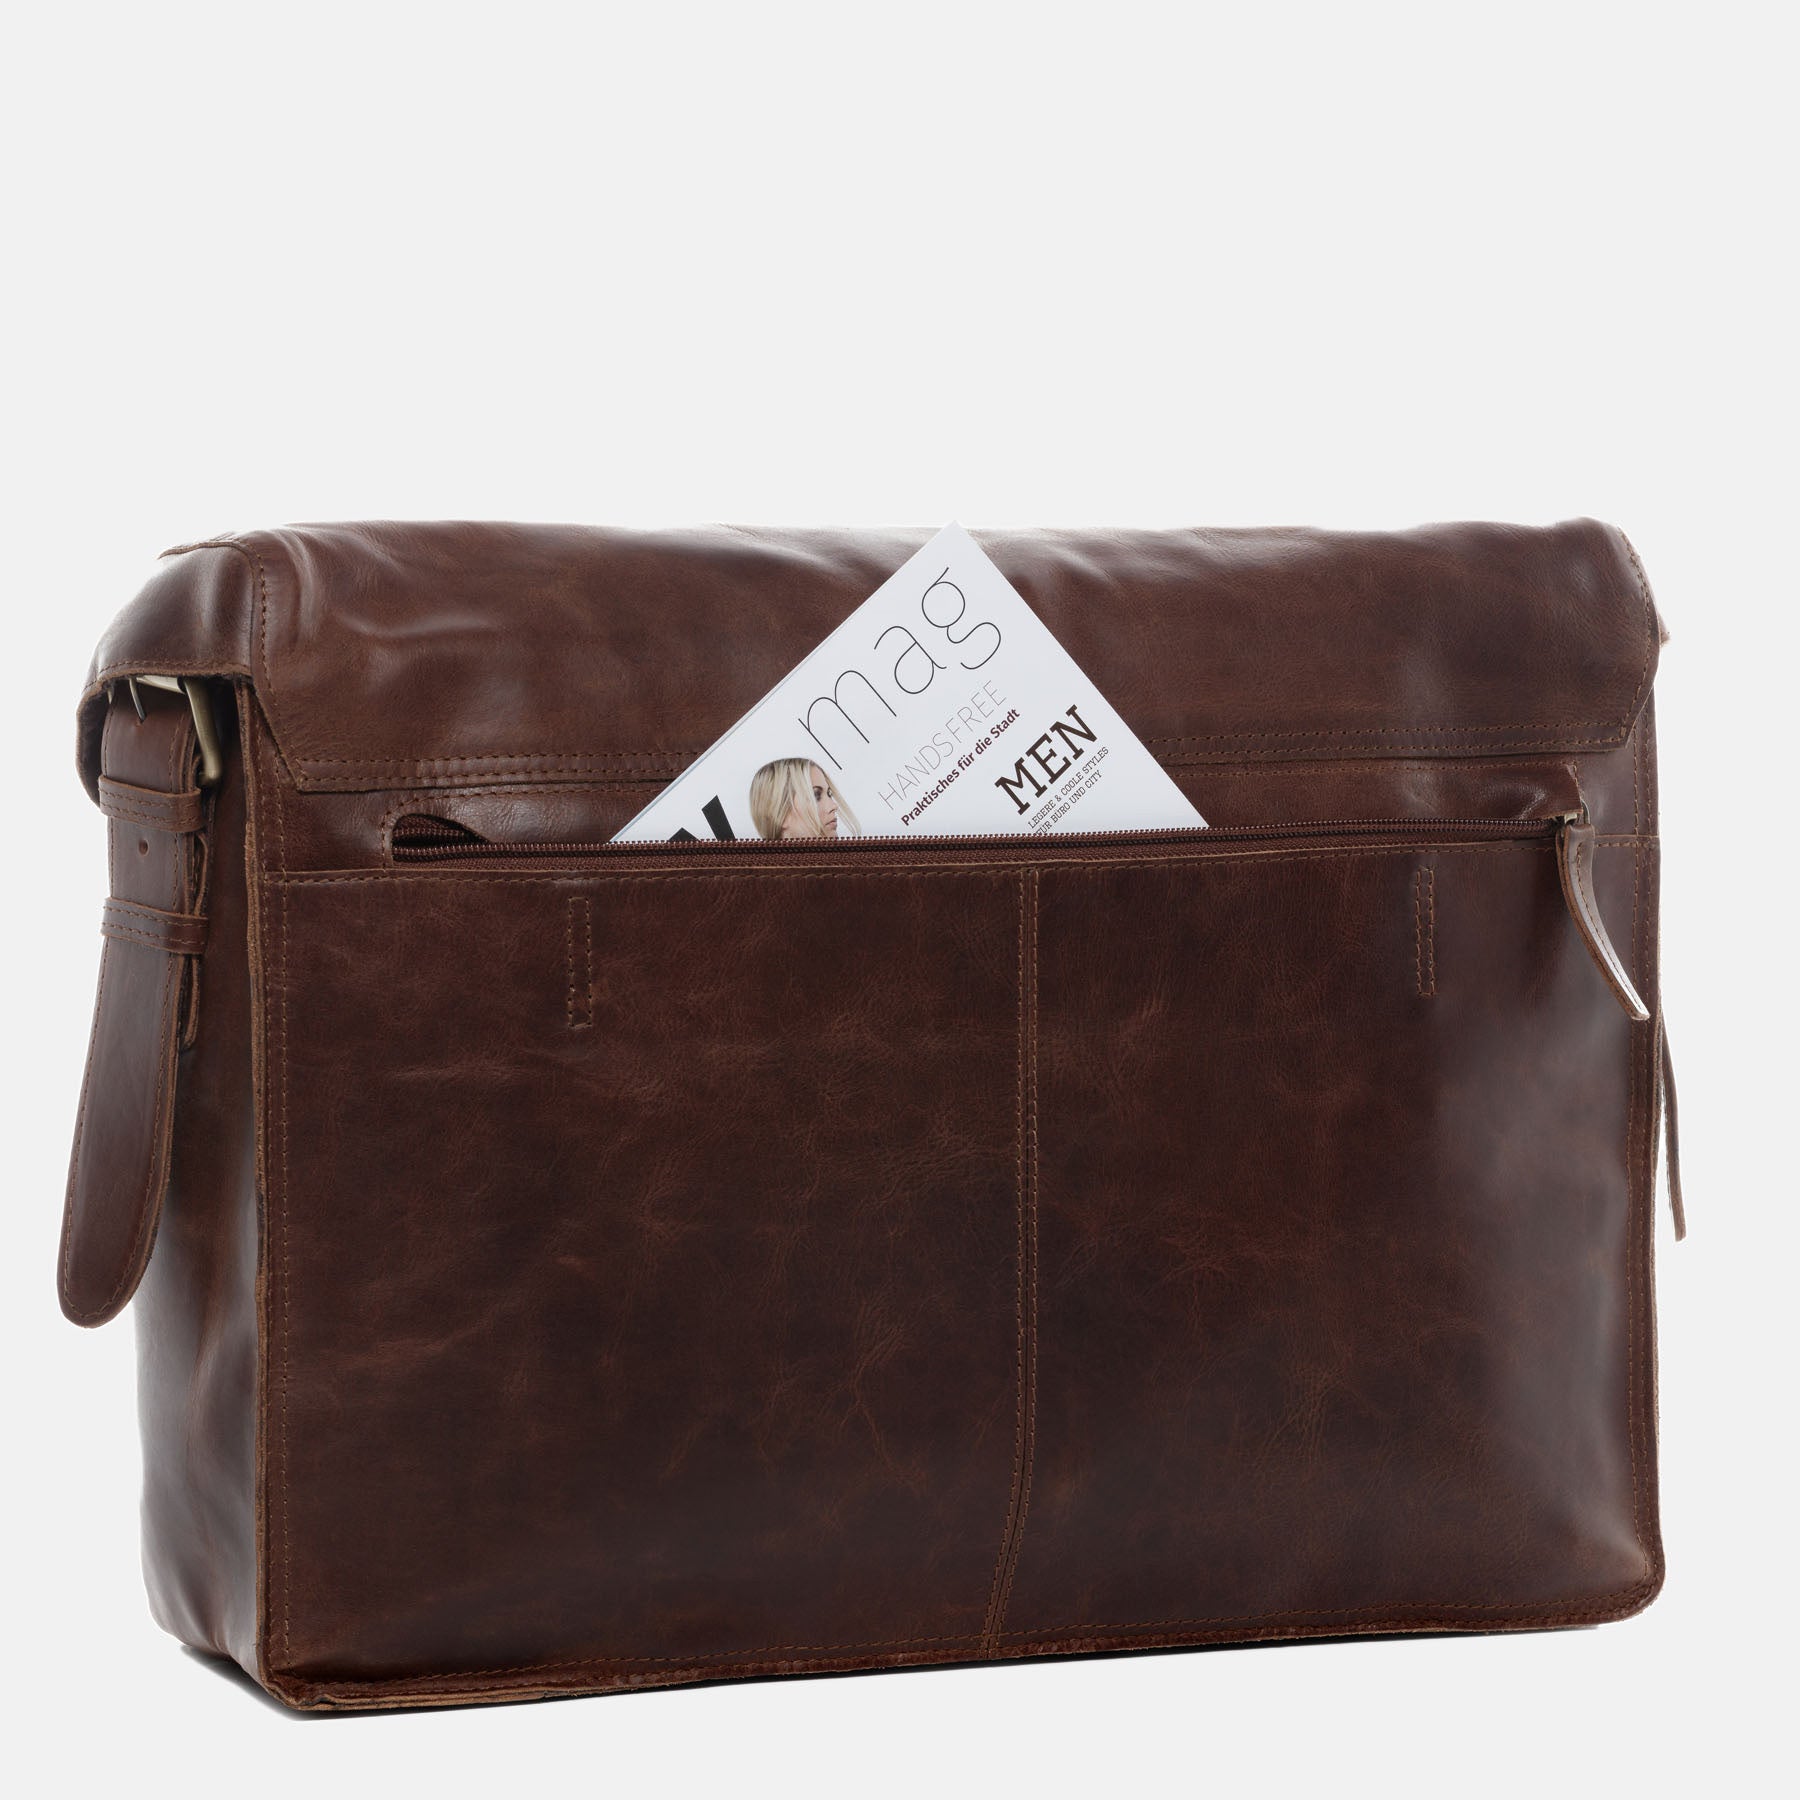 Briefcase ETON natural leather brown-cognac